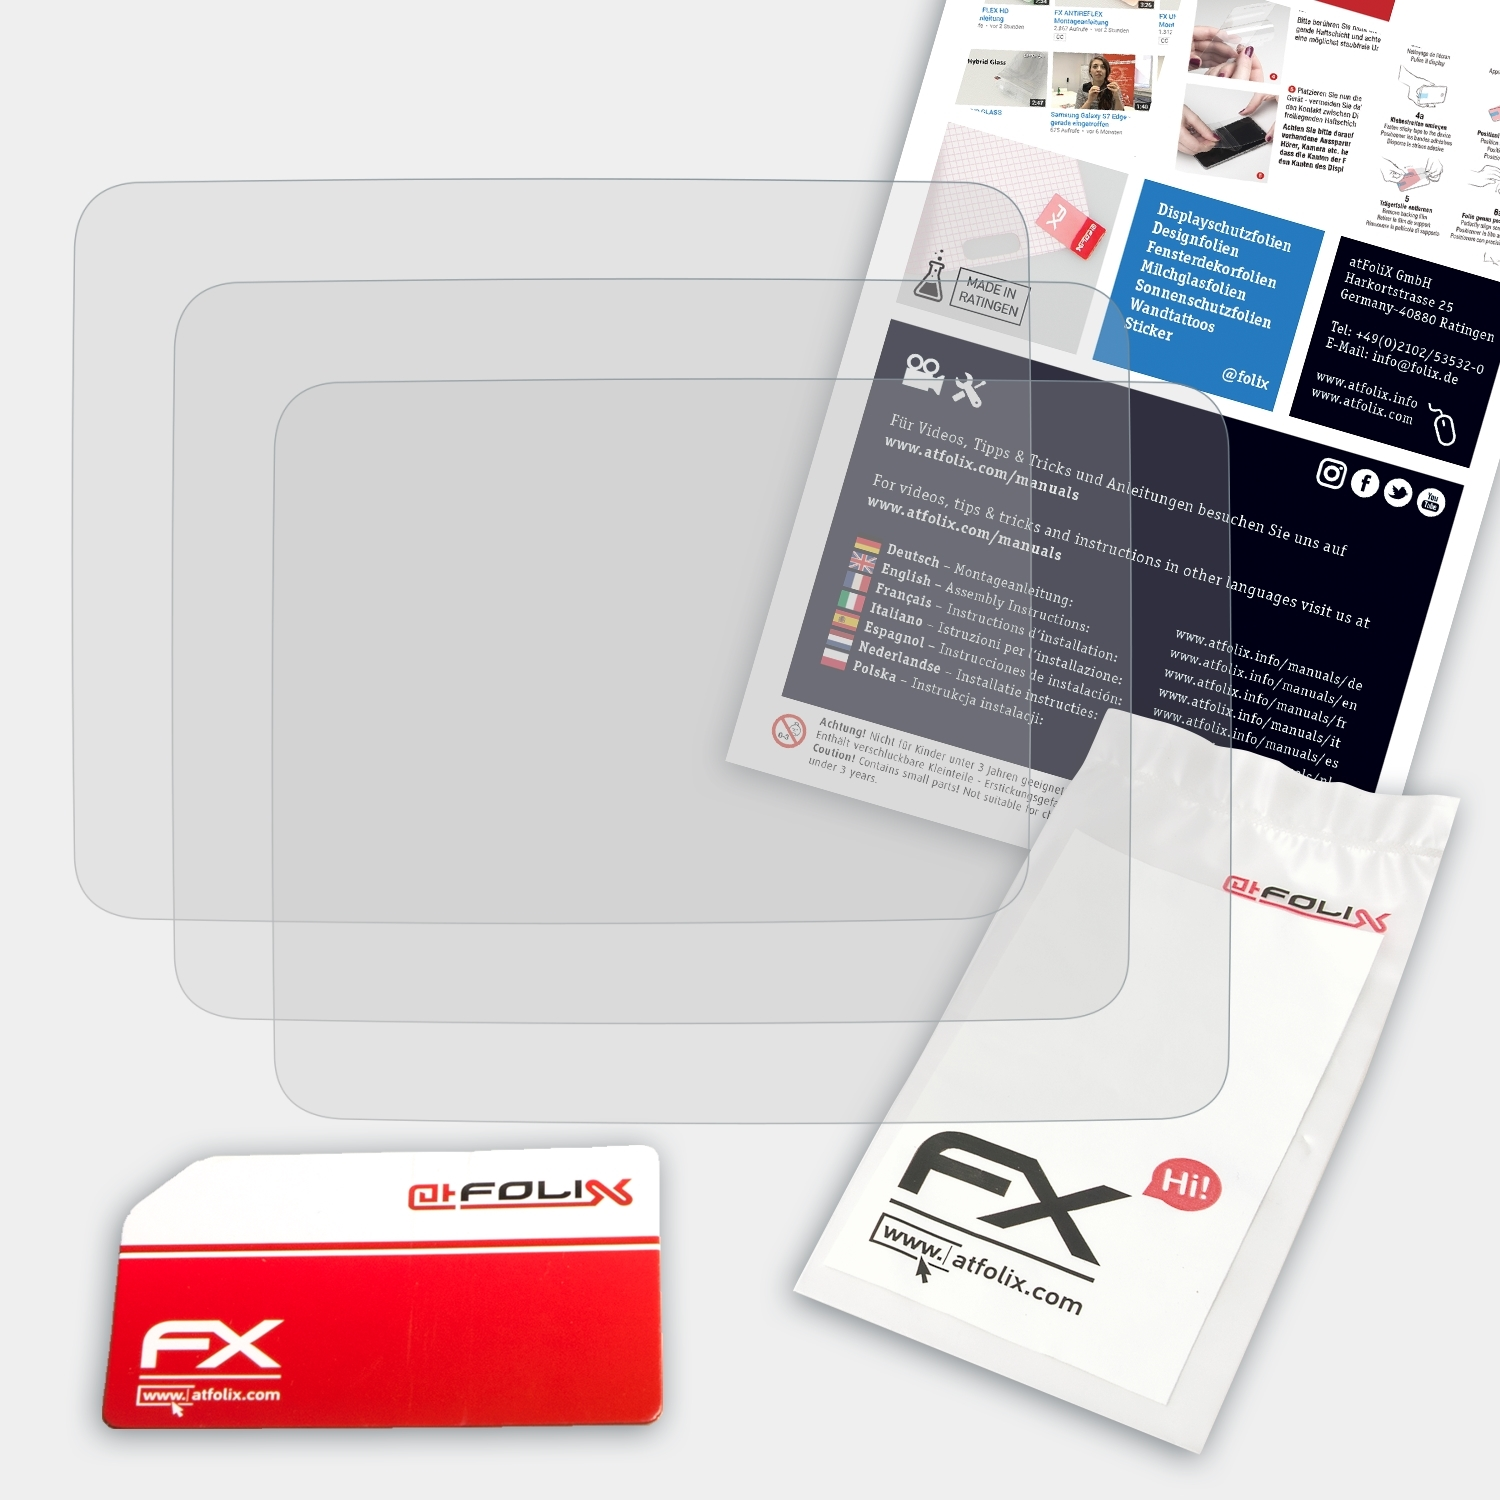 Displayschutz(für ATFOLIX Fujifilm 3x FX-Antireflex XP120) FinePix